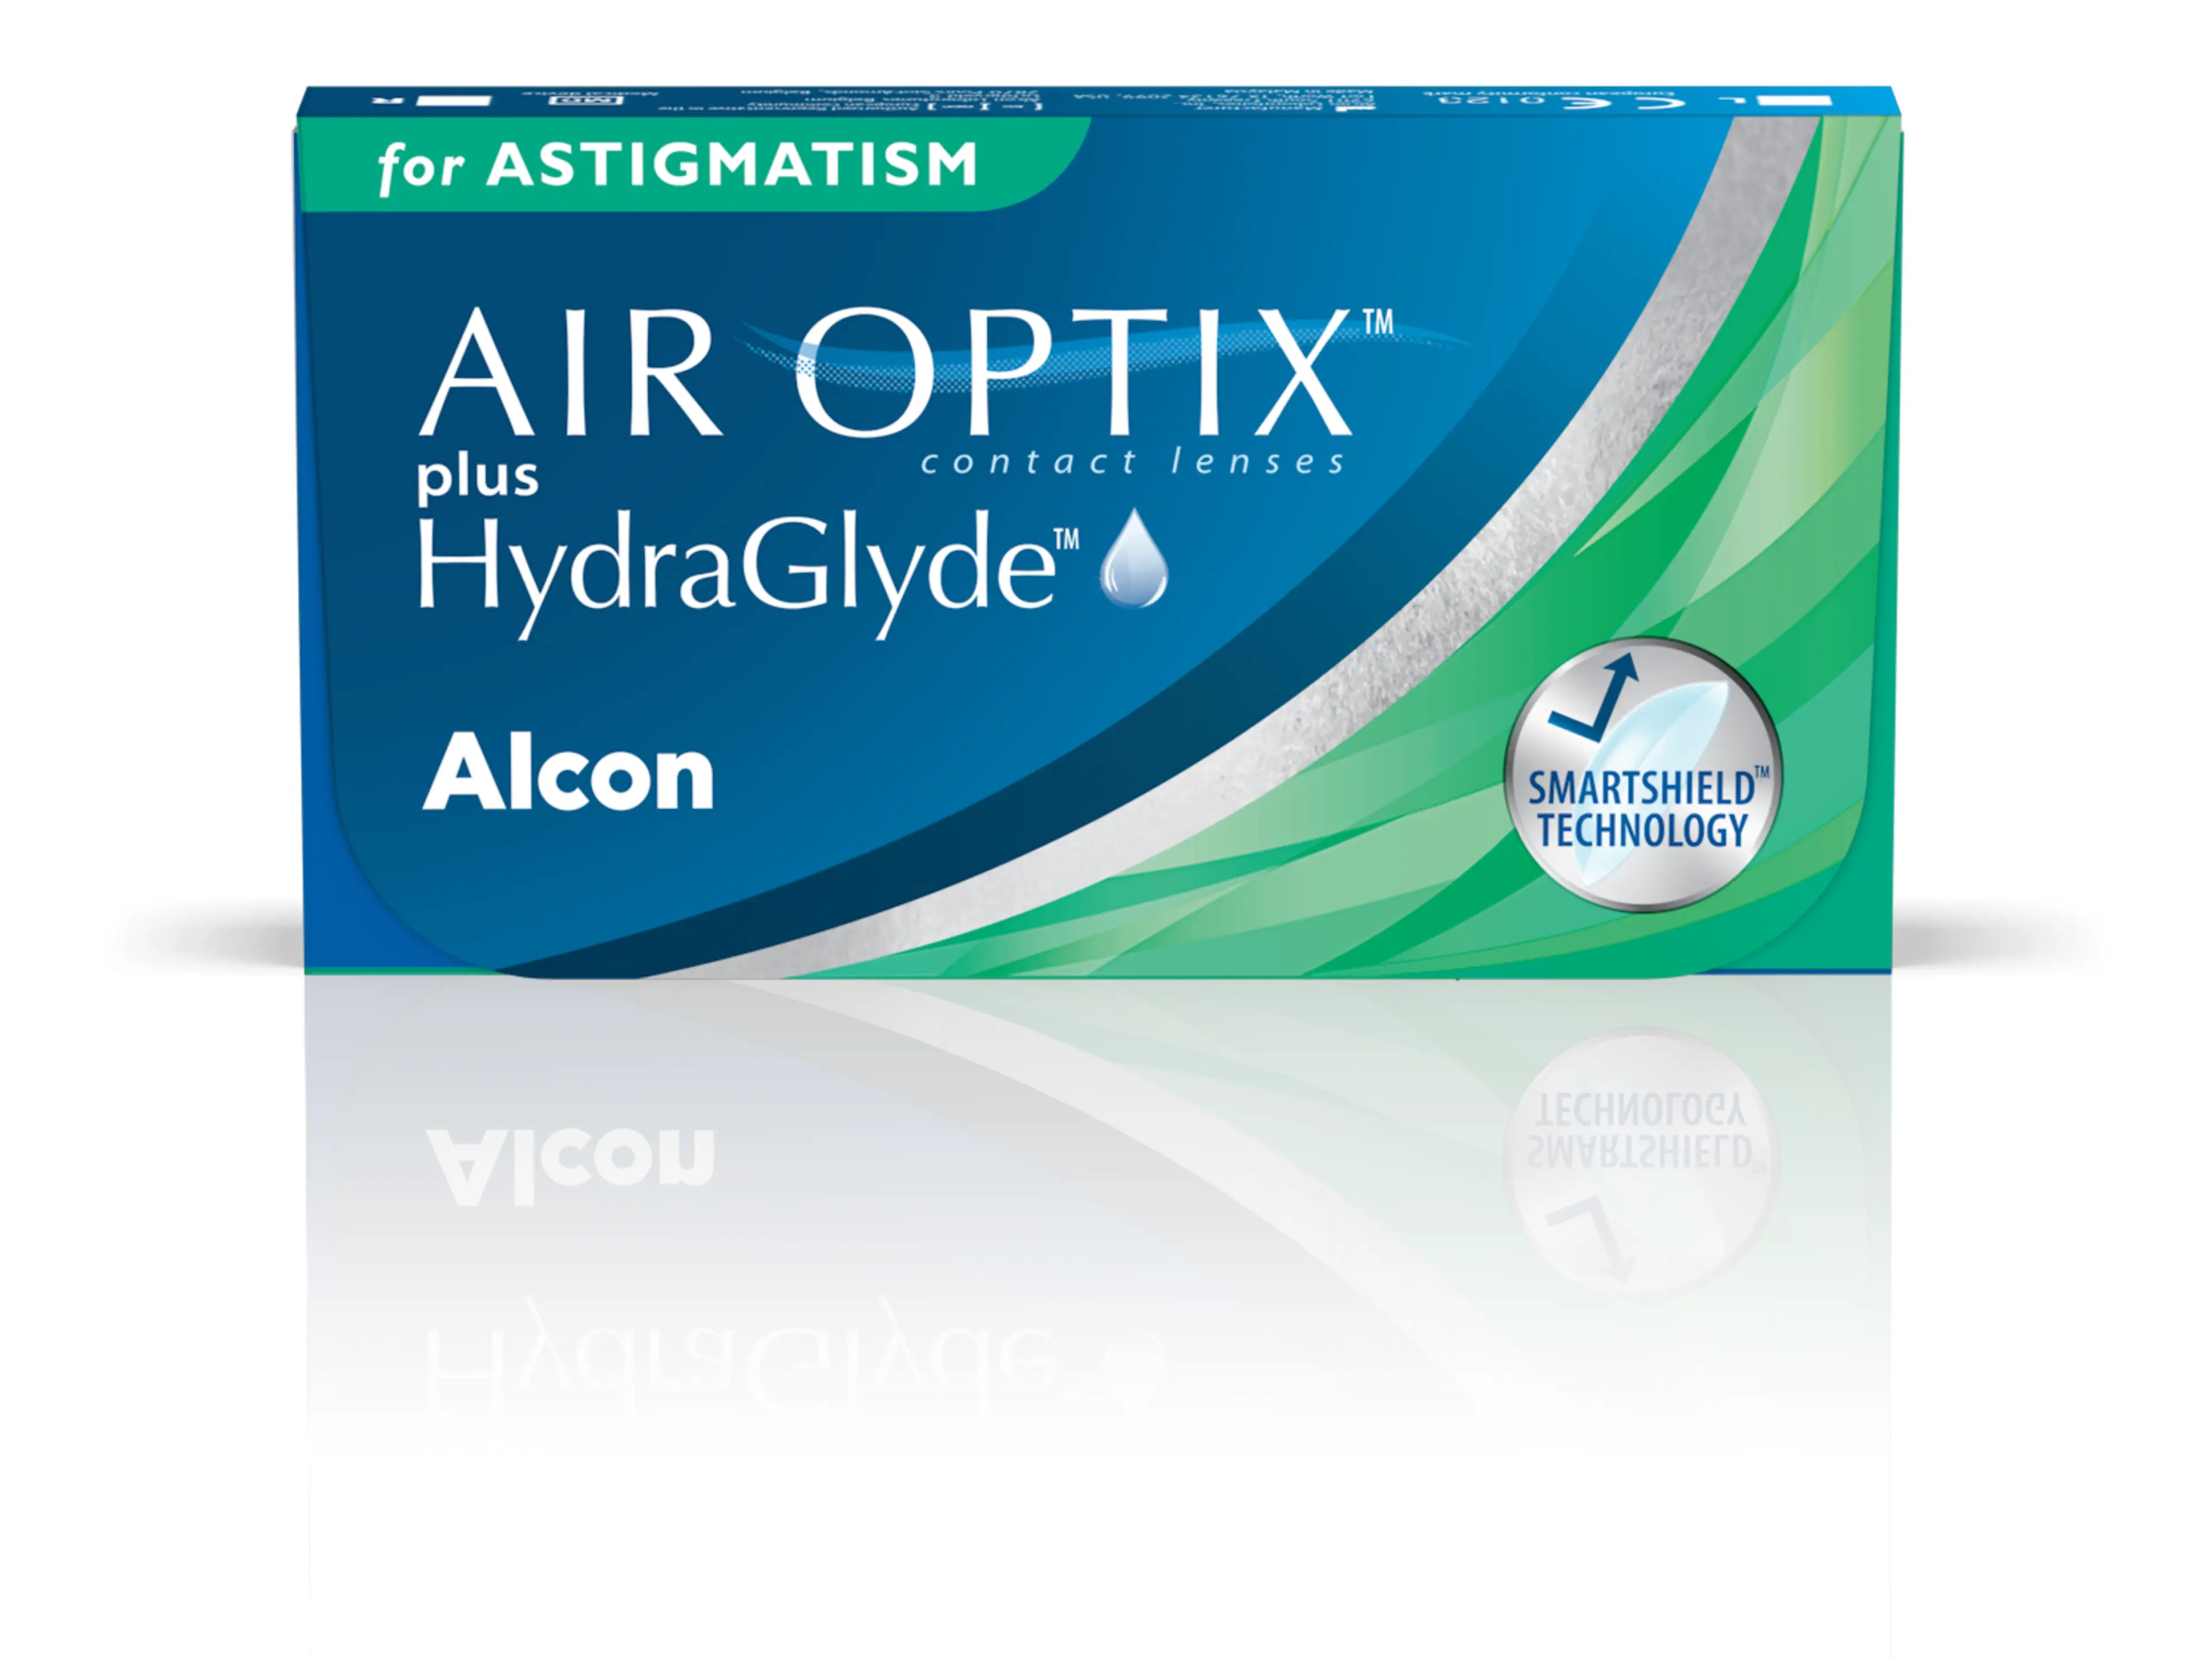 AIR OPTIX plus HydraGlyde for ASTIGMATISM (3)